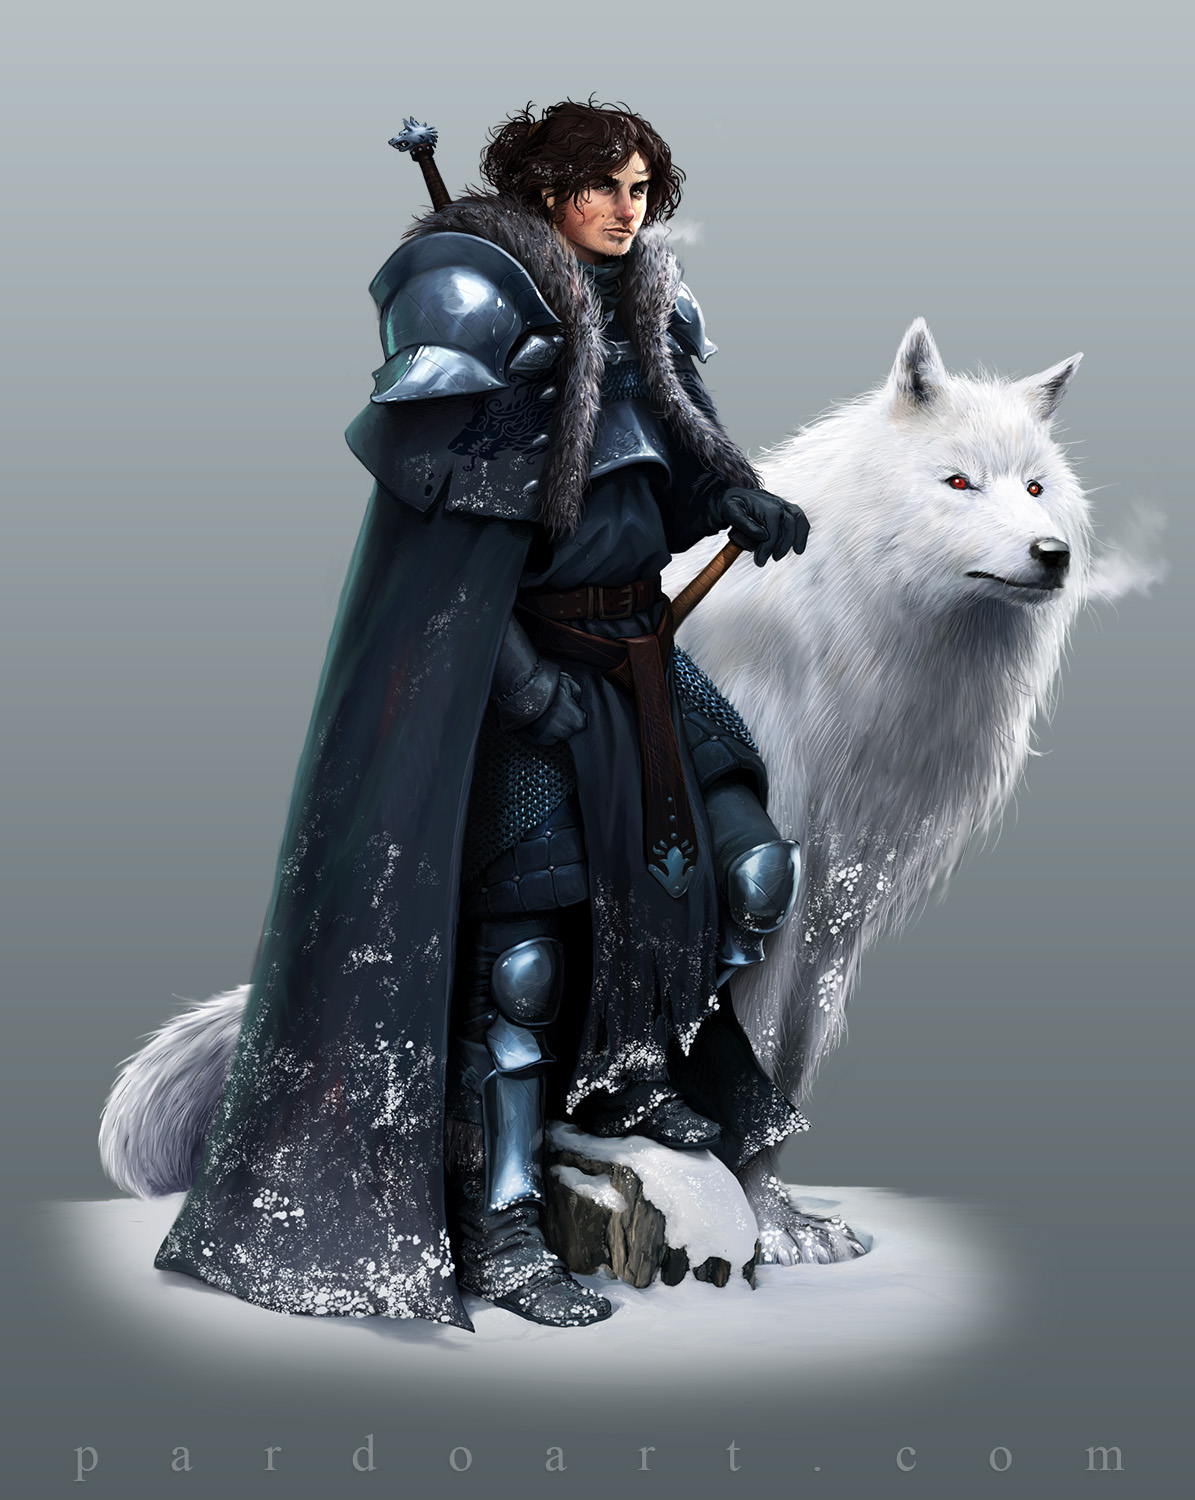 Jon Snow por Alfonso Pardo.jpg